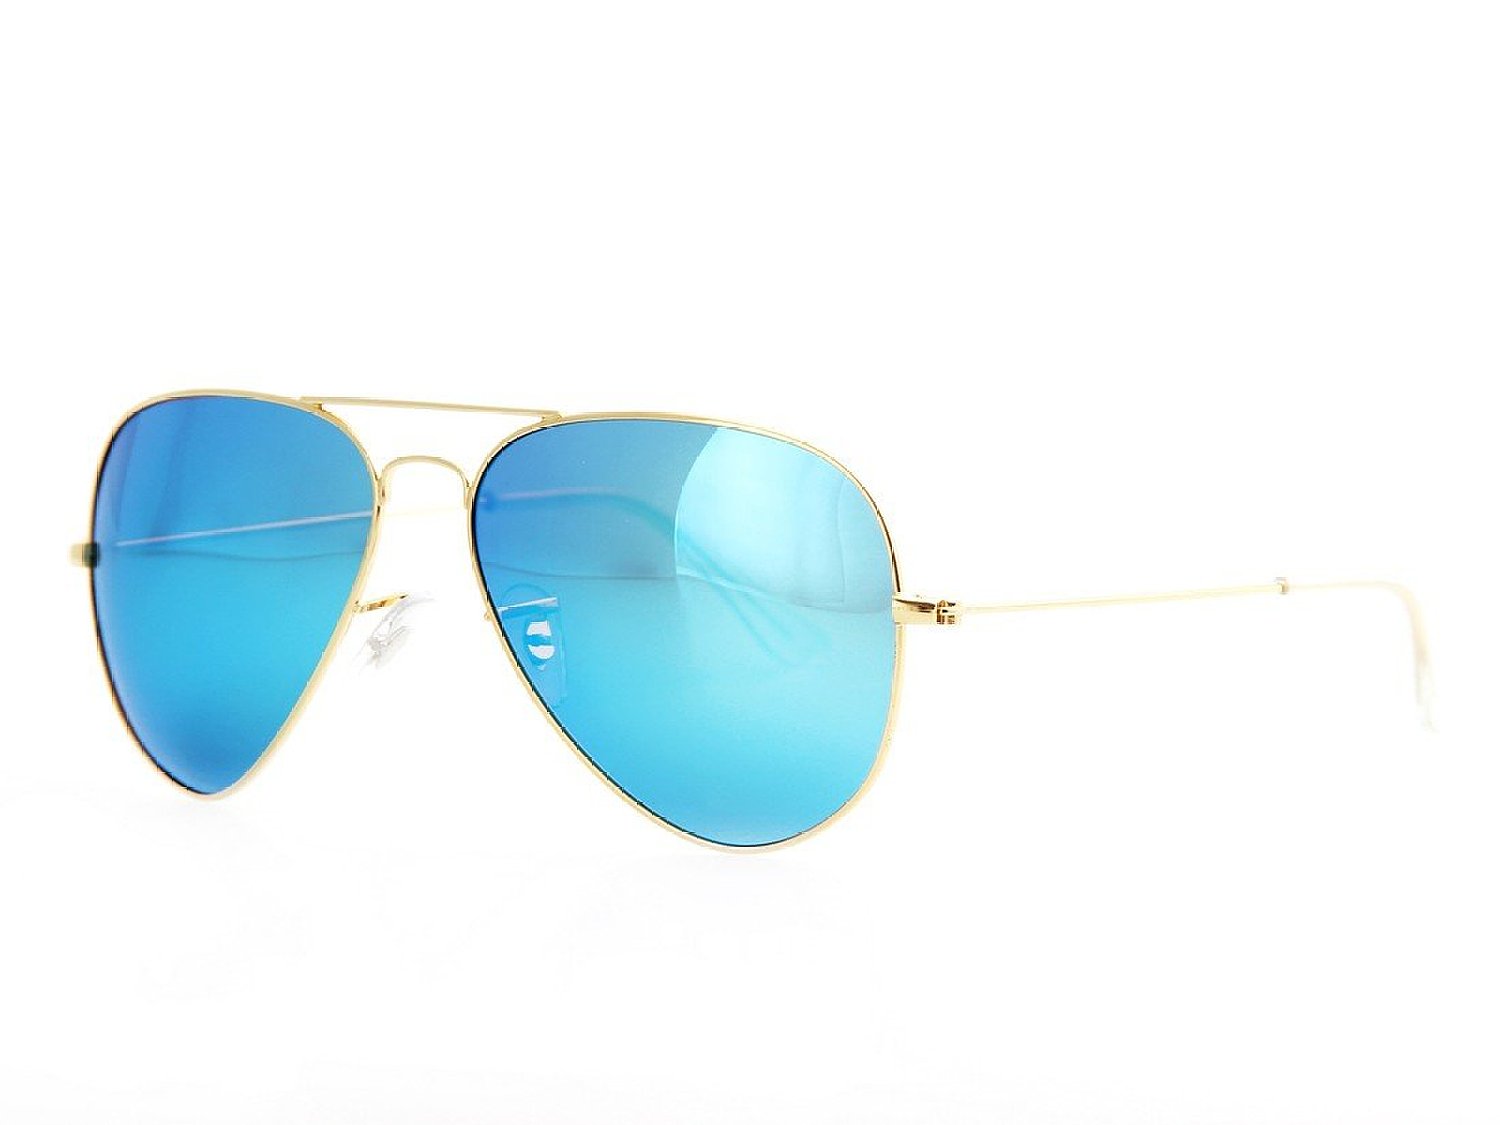 AEVOGUE Men's Polarized Sunglasses Aviator Reflective Lens UV400